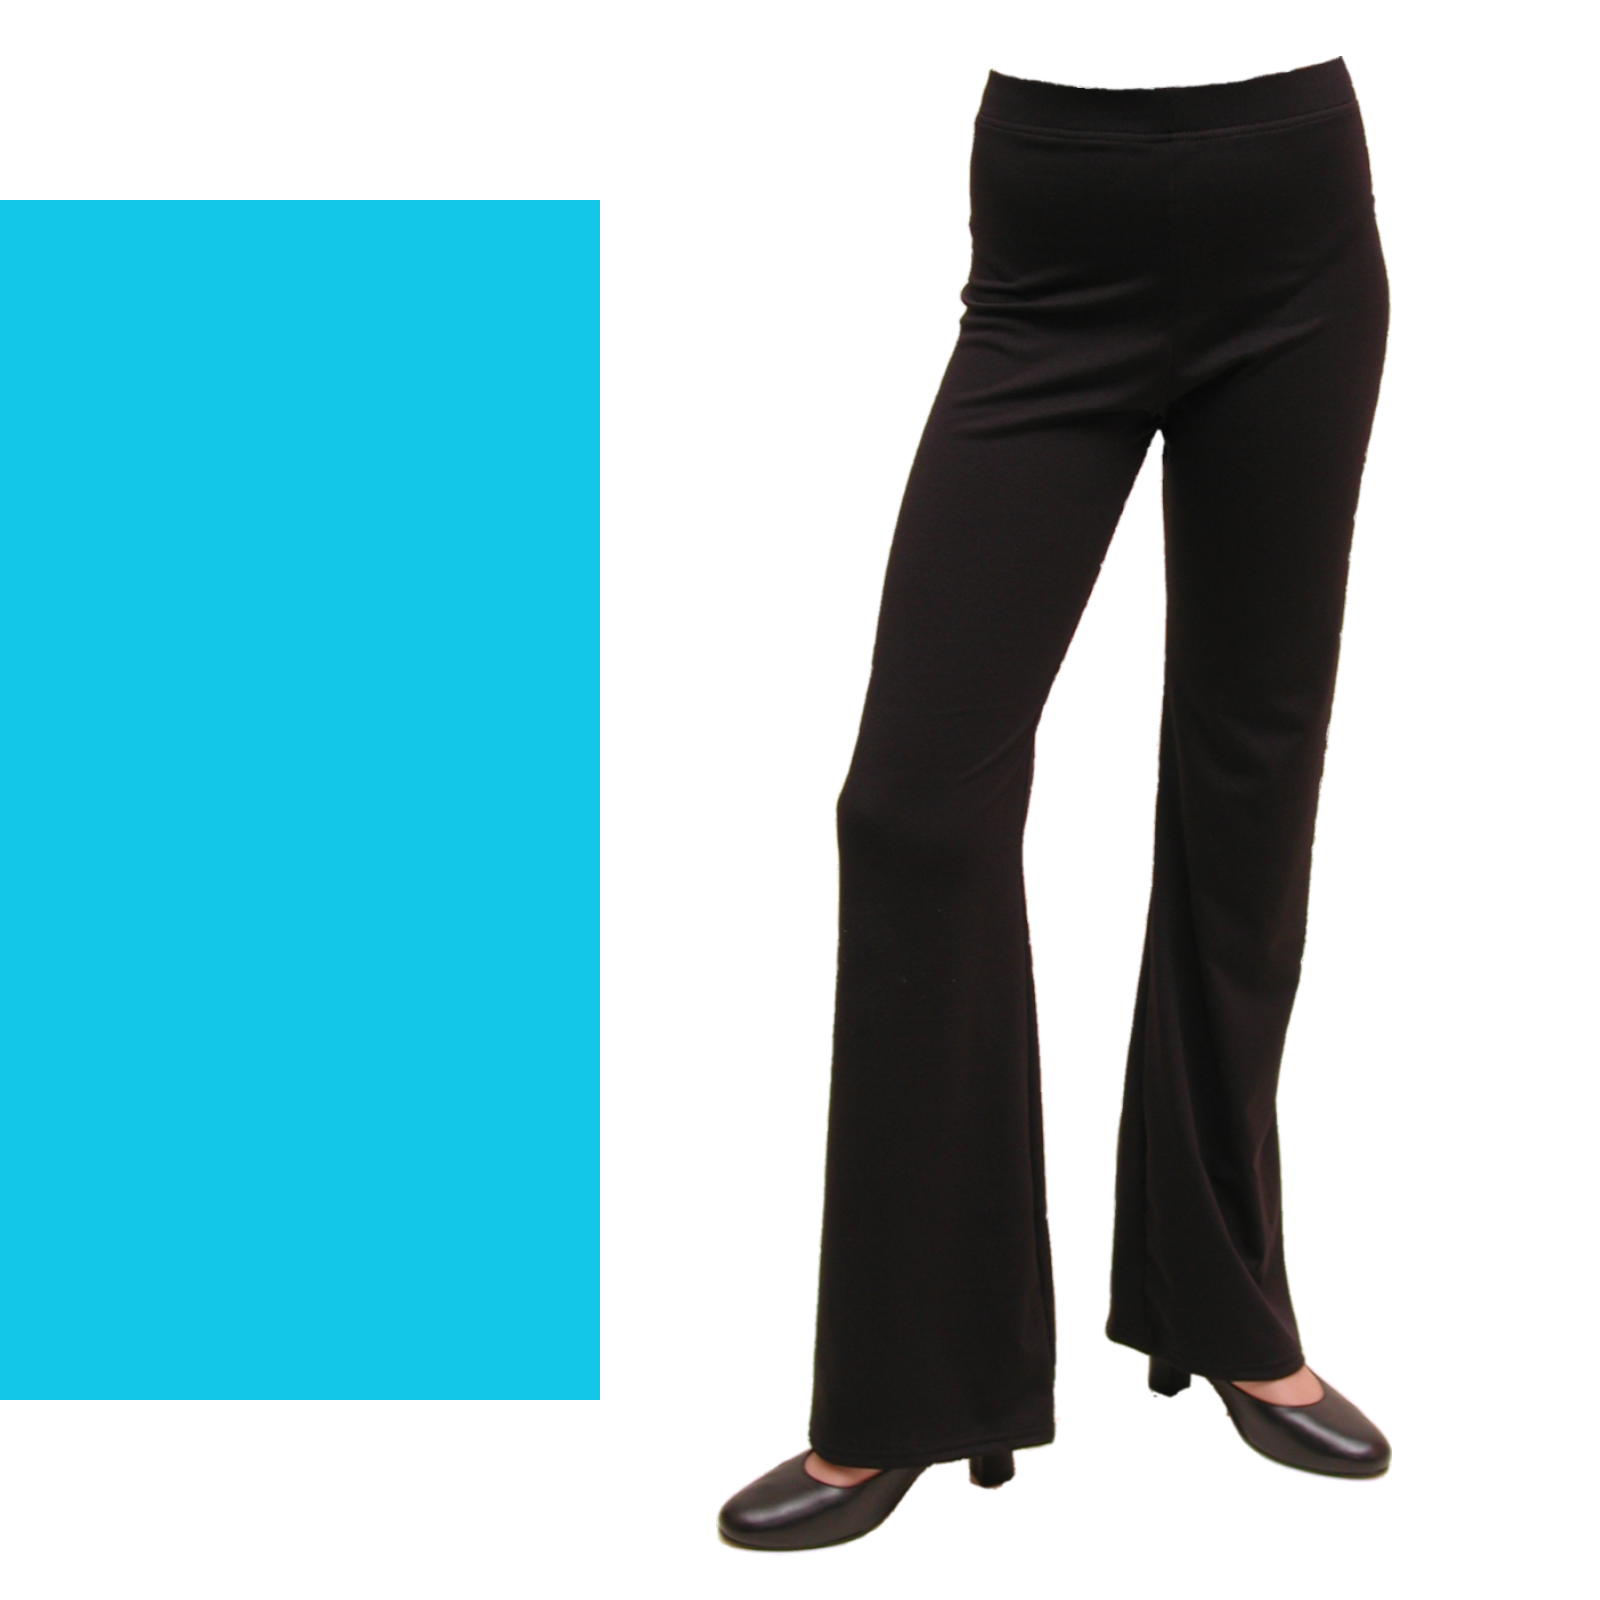 Smarty Pants women's cotton lycra bell bottom navy blue color formal trouser